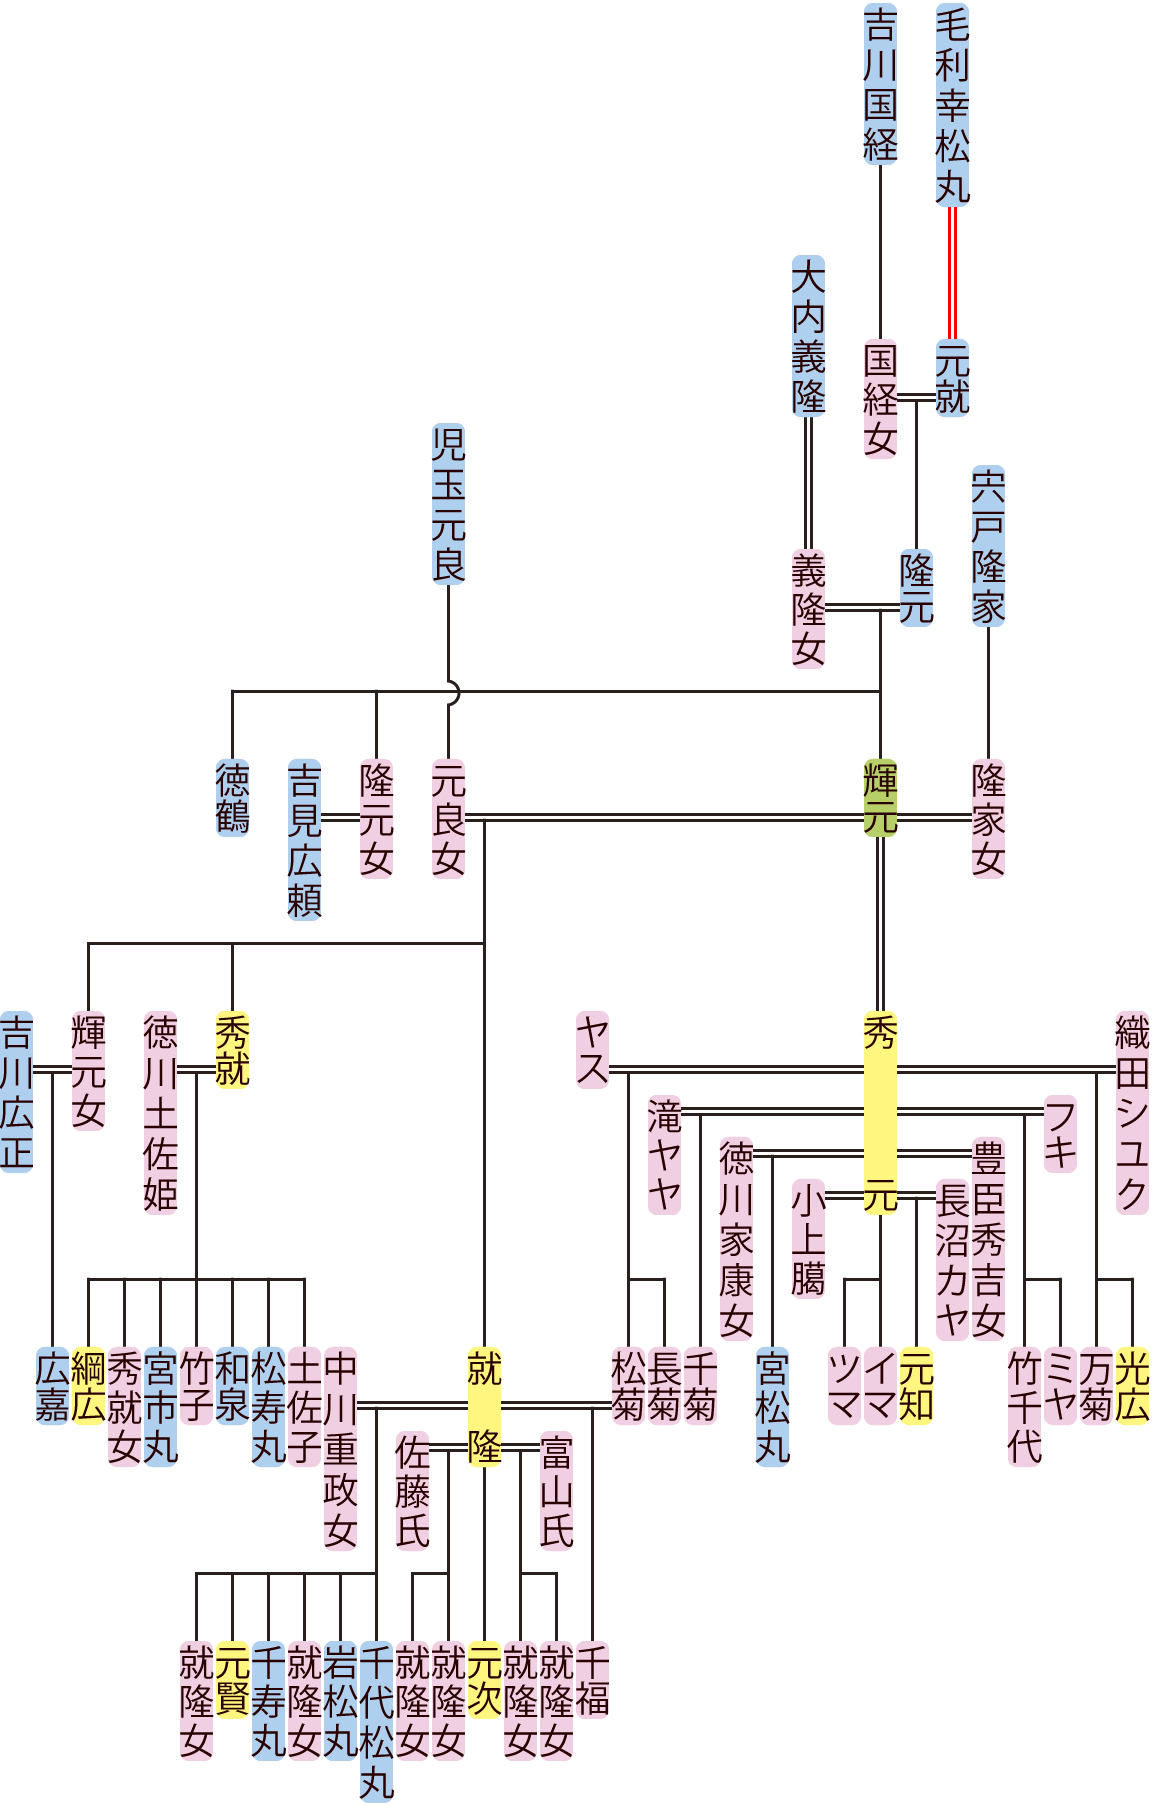 毛利隆元・輝元の系図